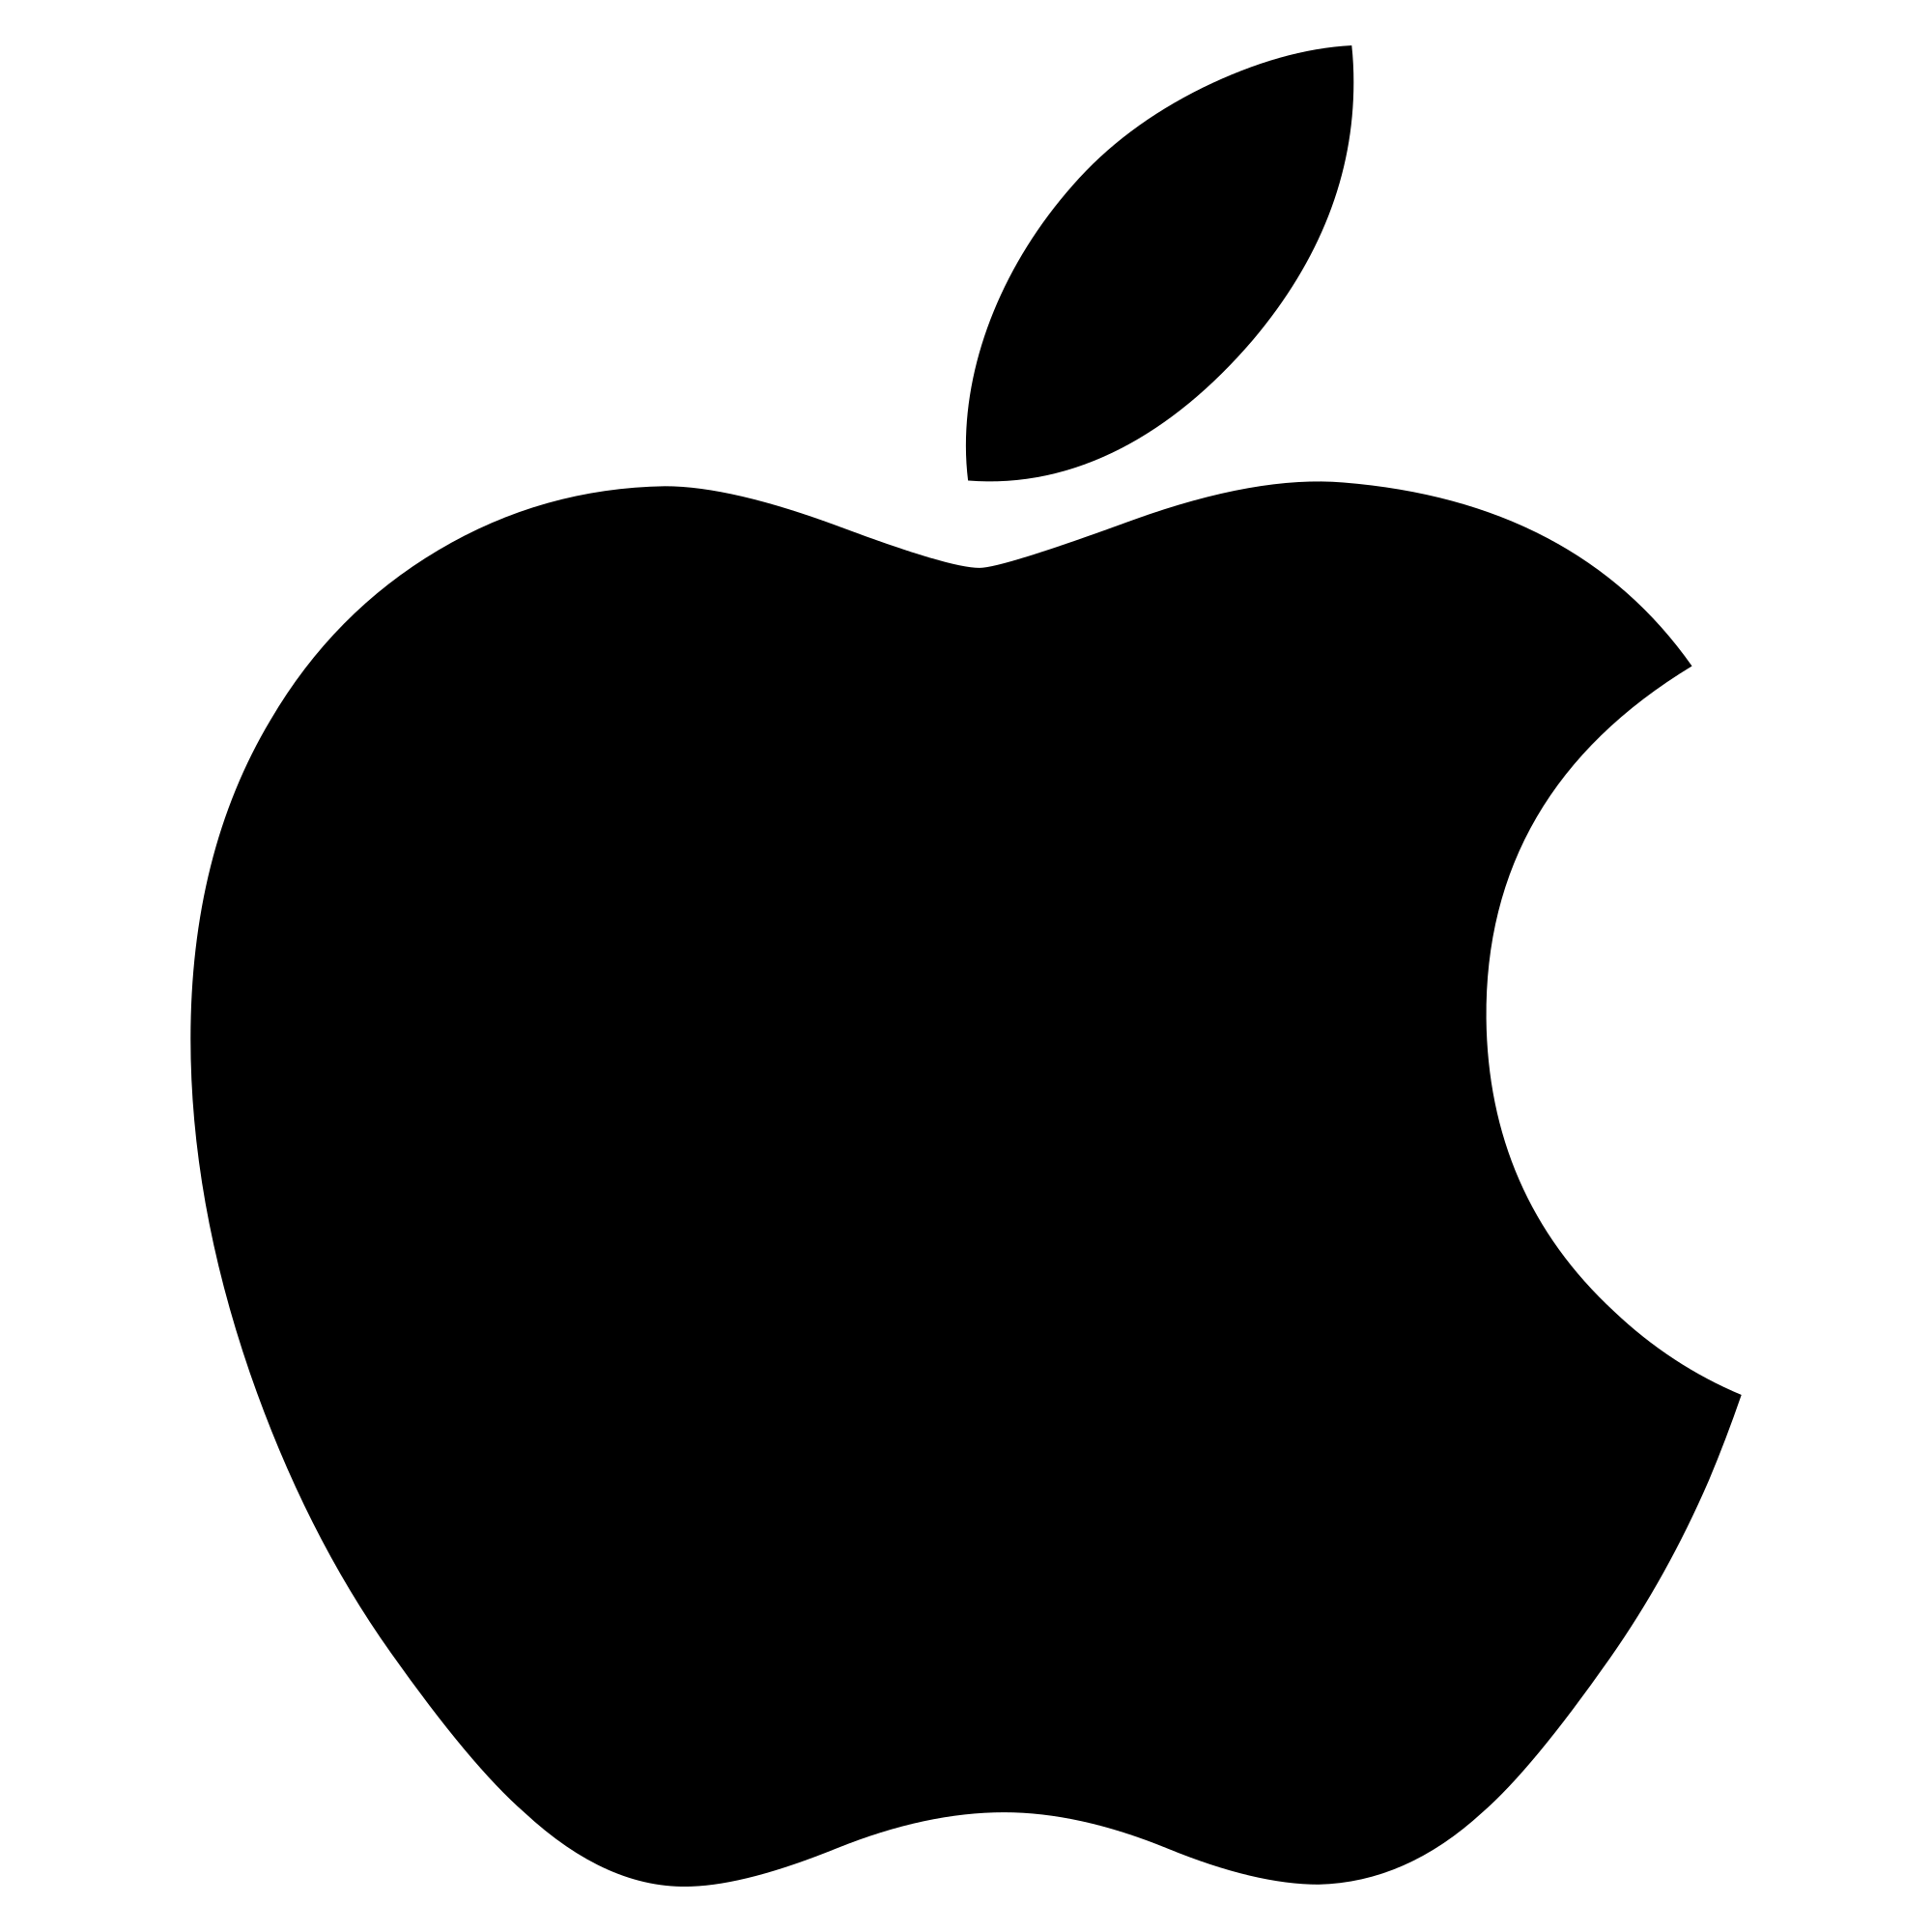 Black and White Apple Logo - File:Apple logo black.svg - Wikimedia Commons